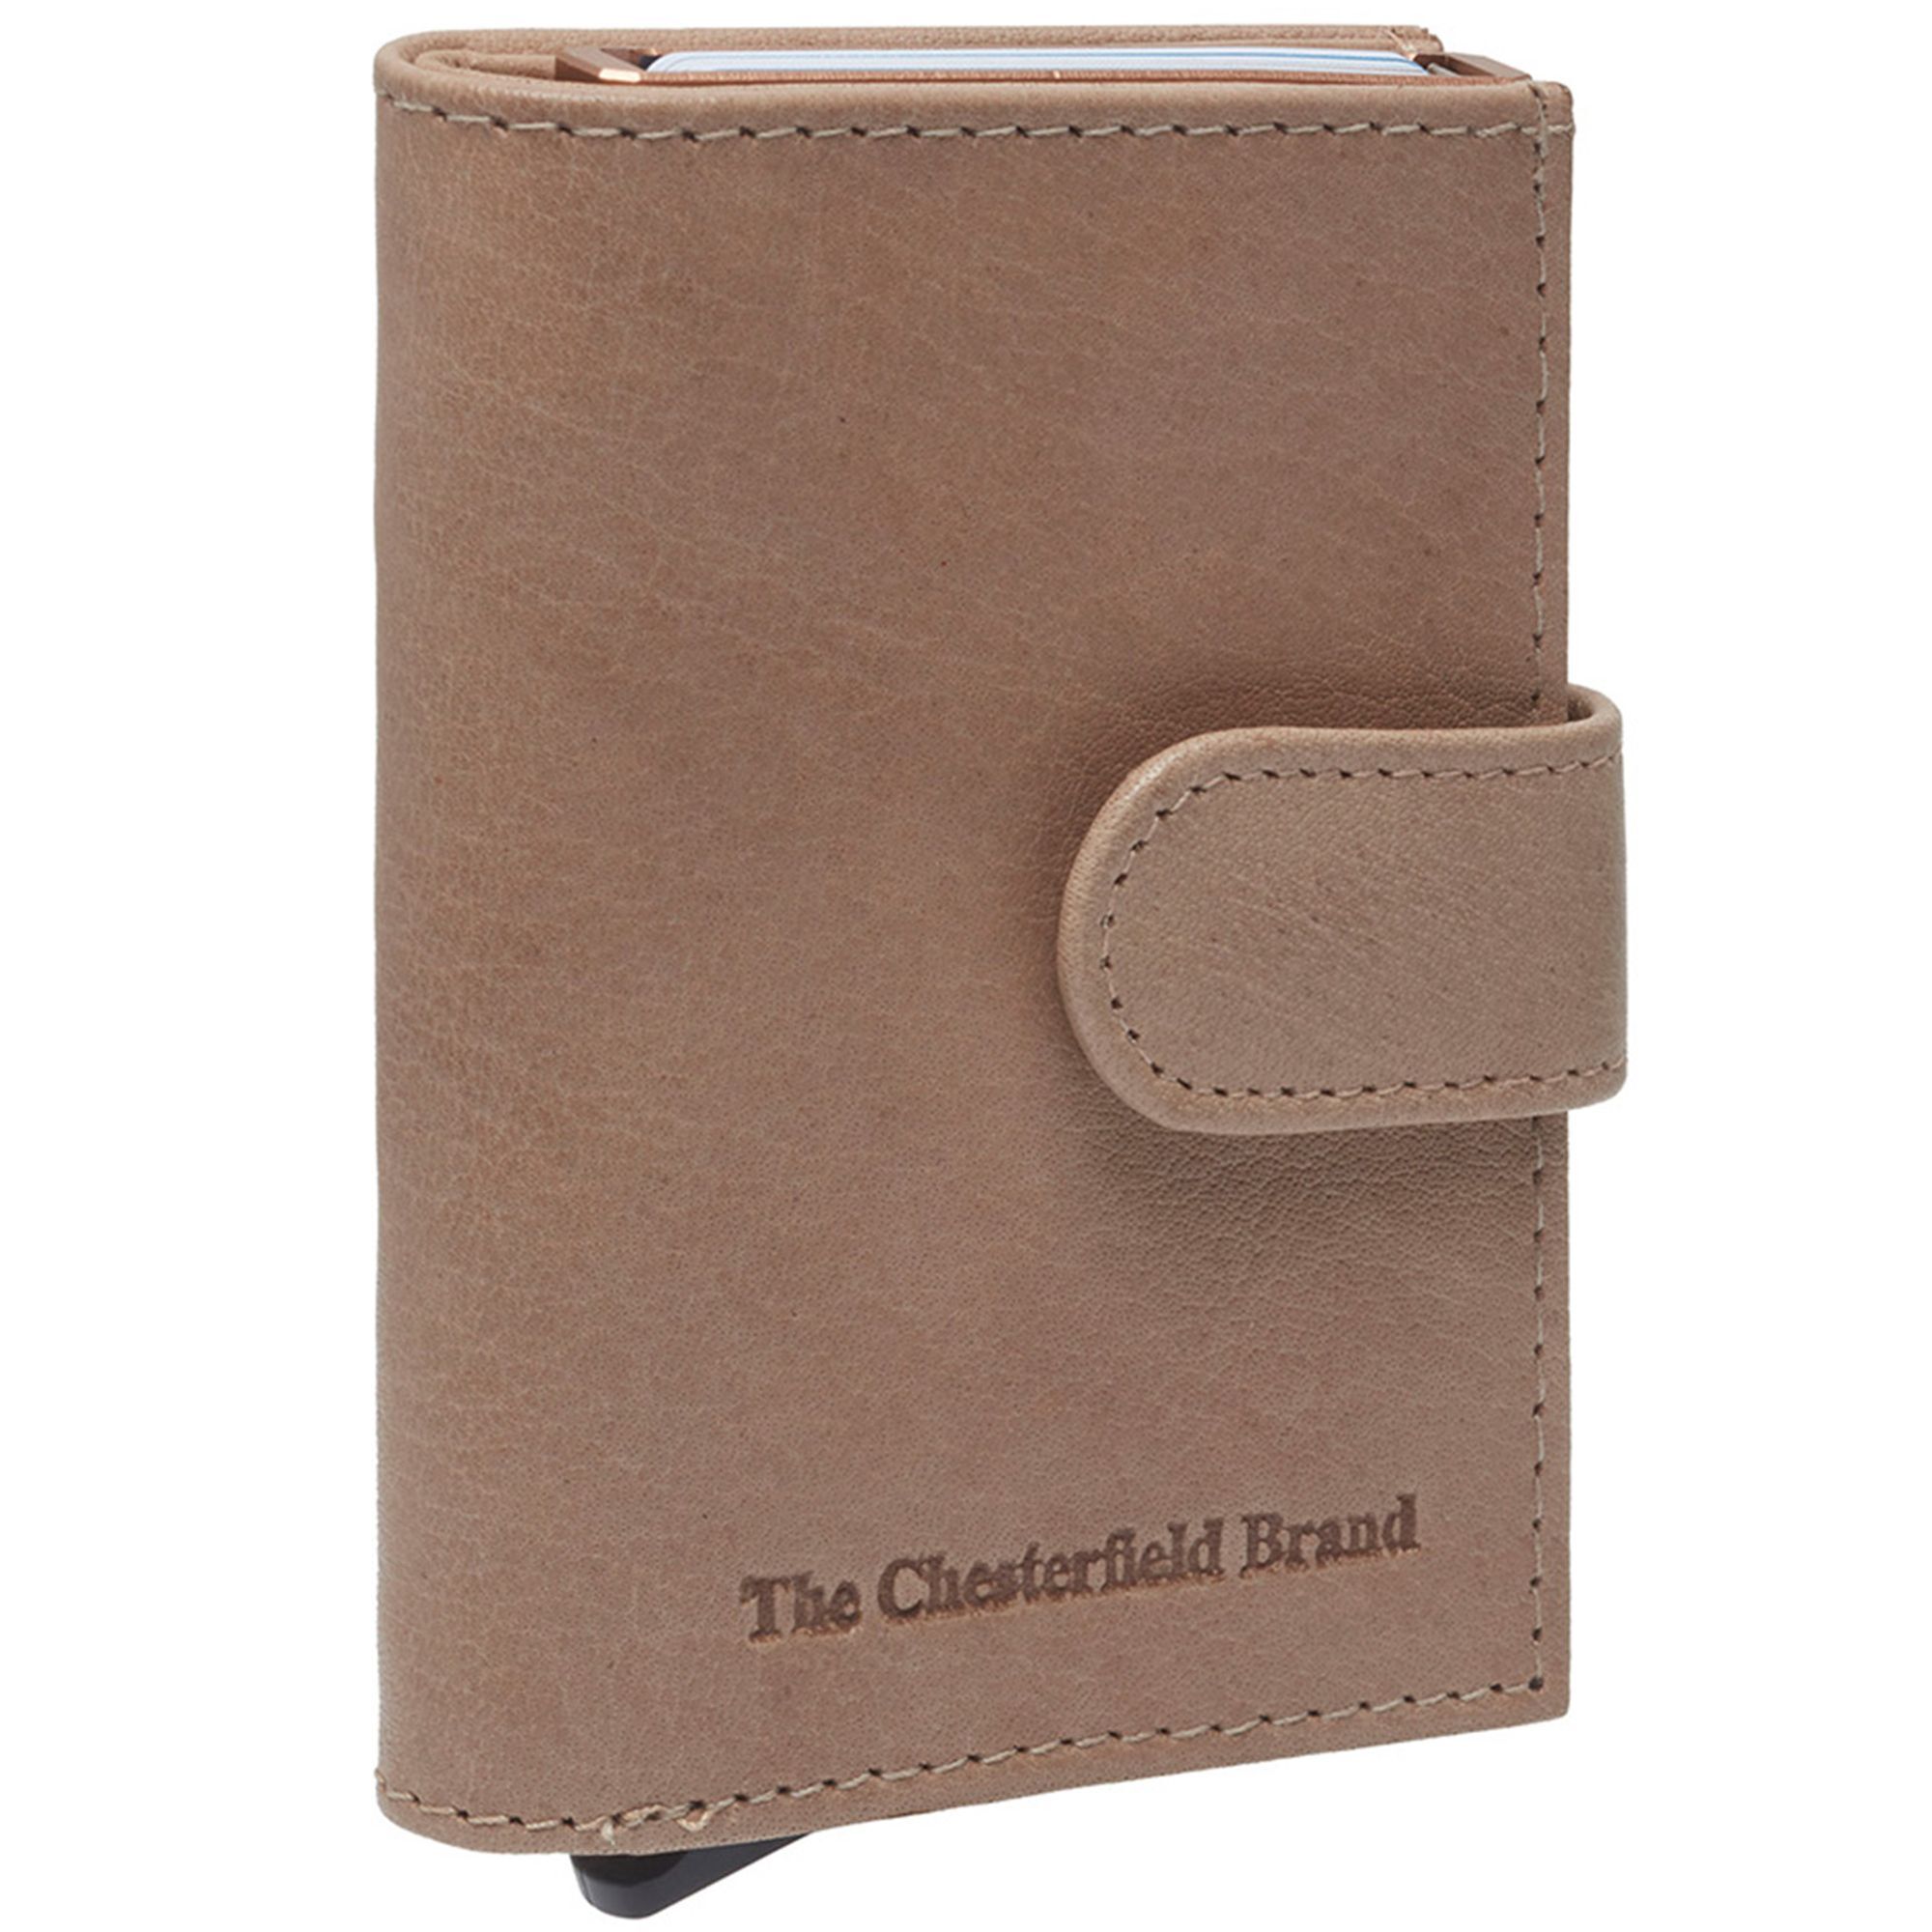 Кошелек The Chesterfield Brand Hannover RFID Schutz Leder 7 см, цвет off white